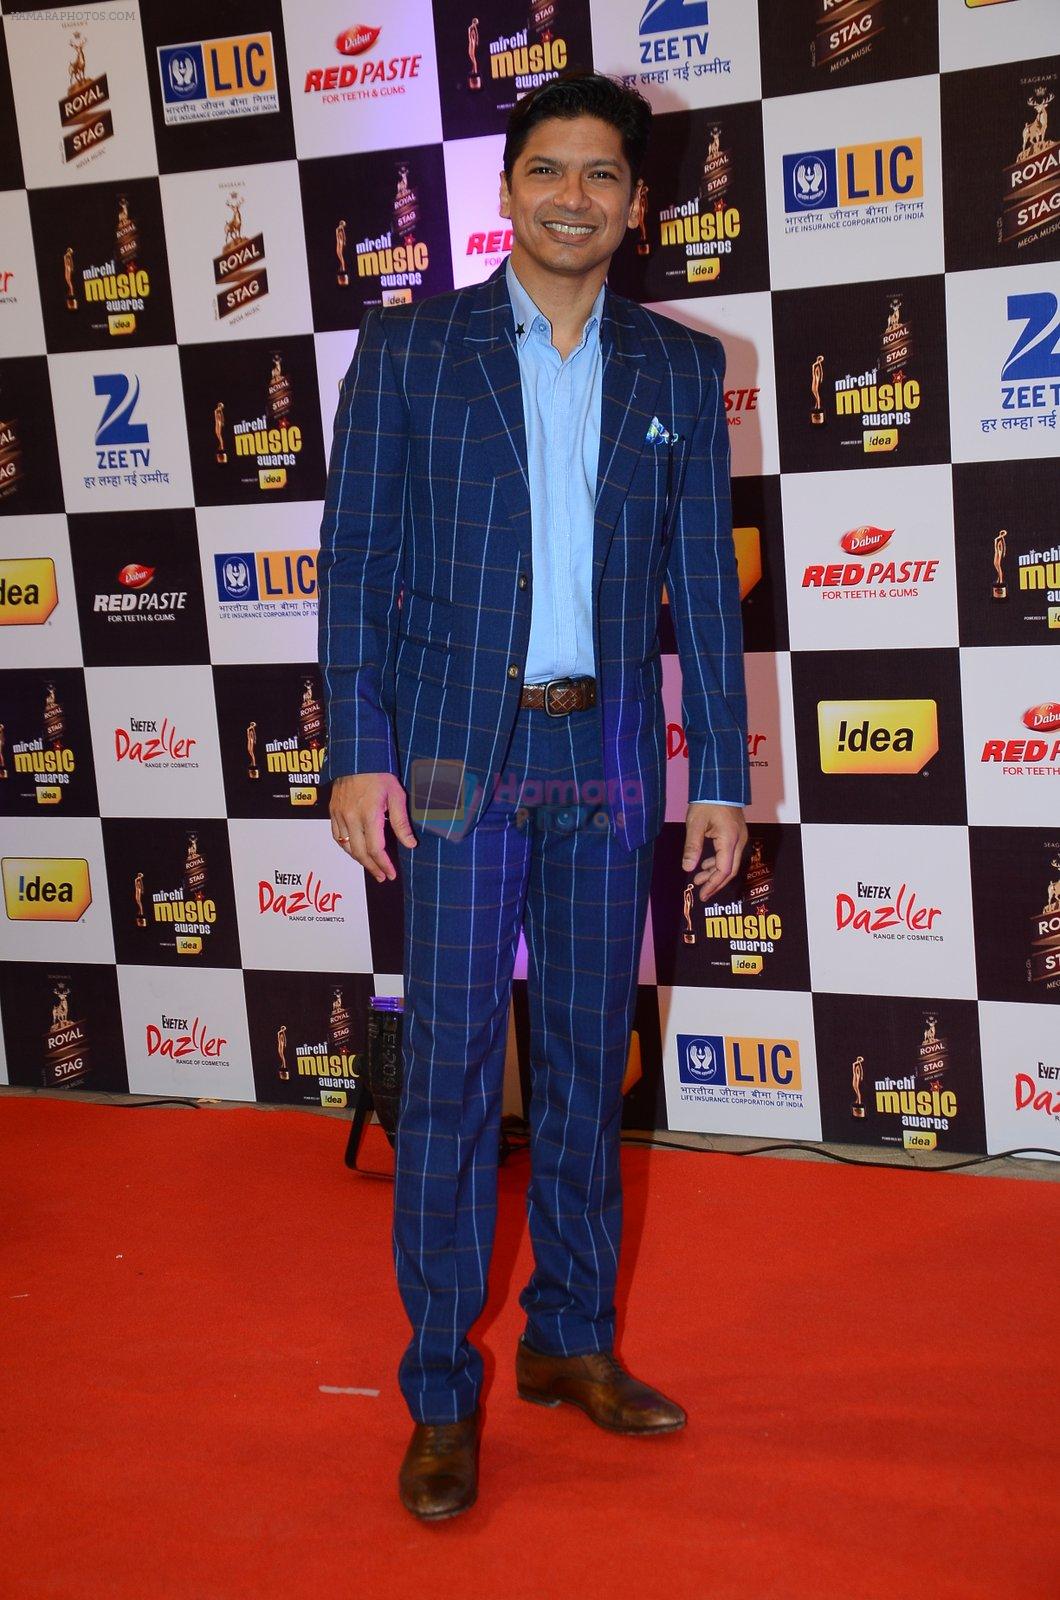 Shaan at radio mirchi awards red carpet in Mumbai on 29th Feb 2016